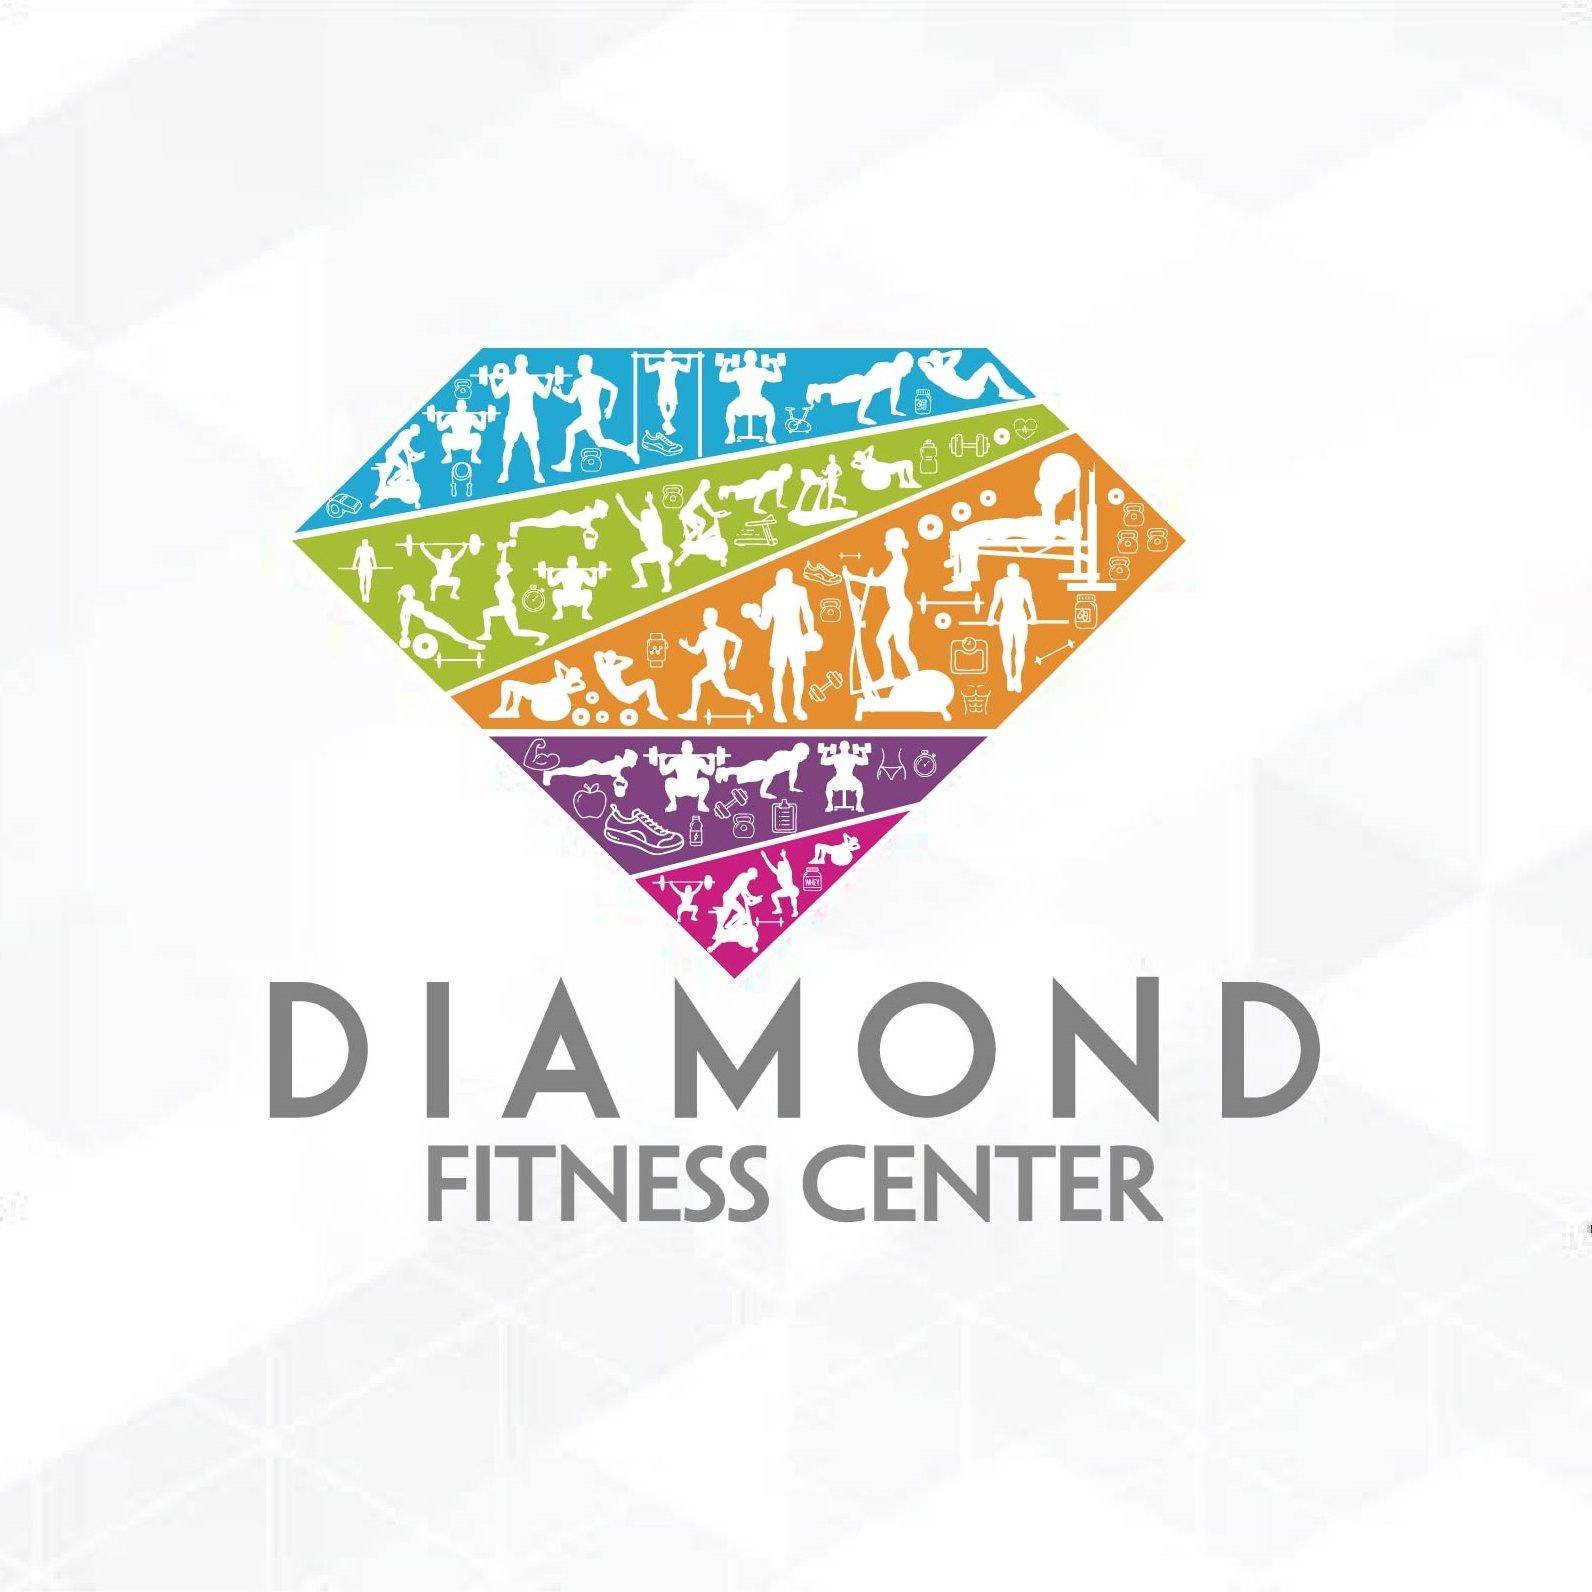 Diamond Fitness Center Paragon Bạch Đằng